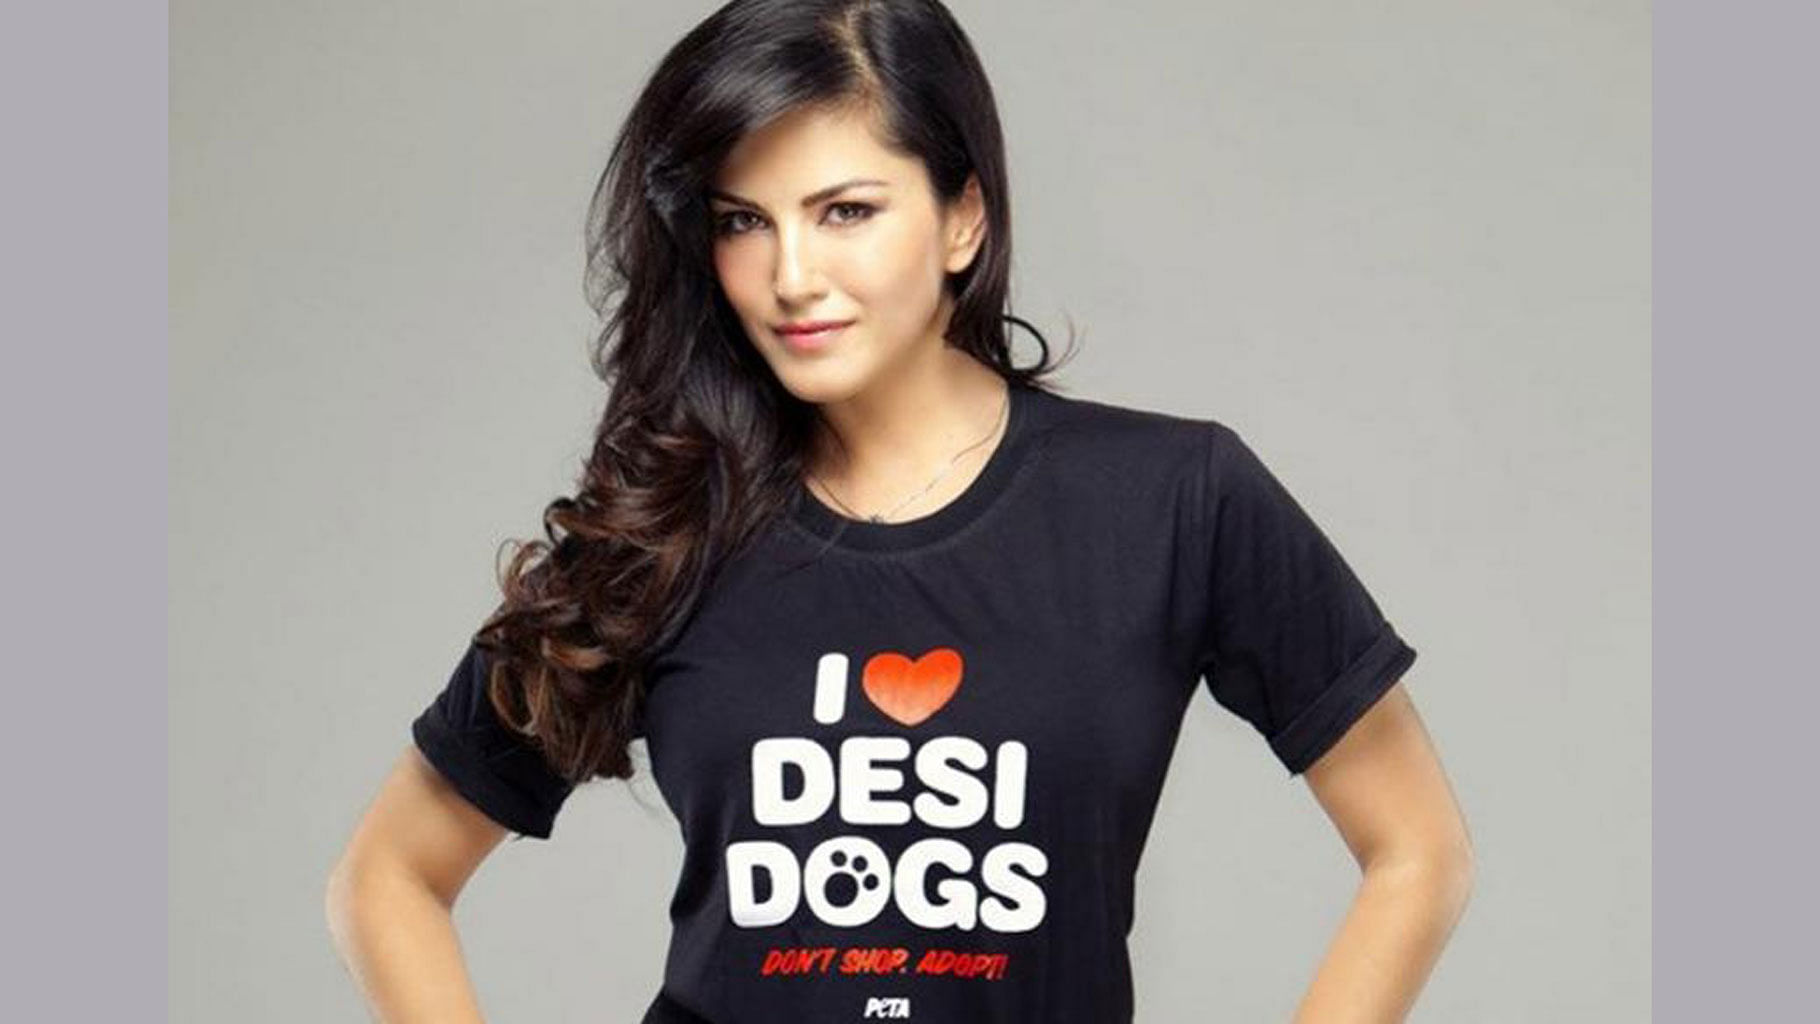 Sunny Leone has a message for animal abusers. (Photo courtesy: PETA India)